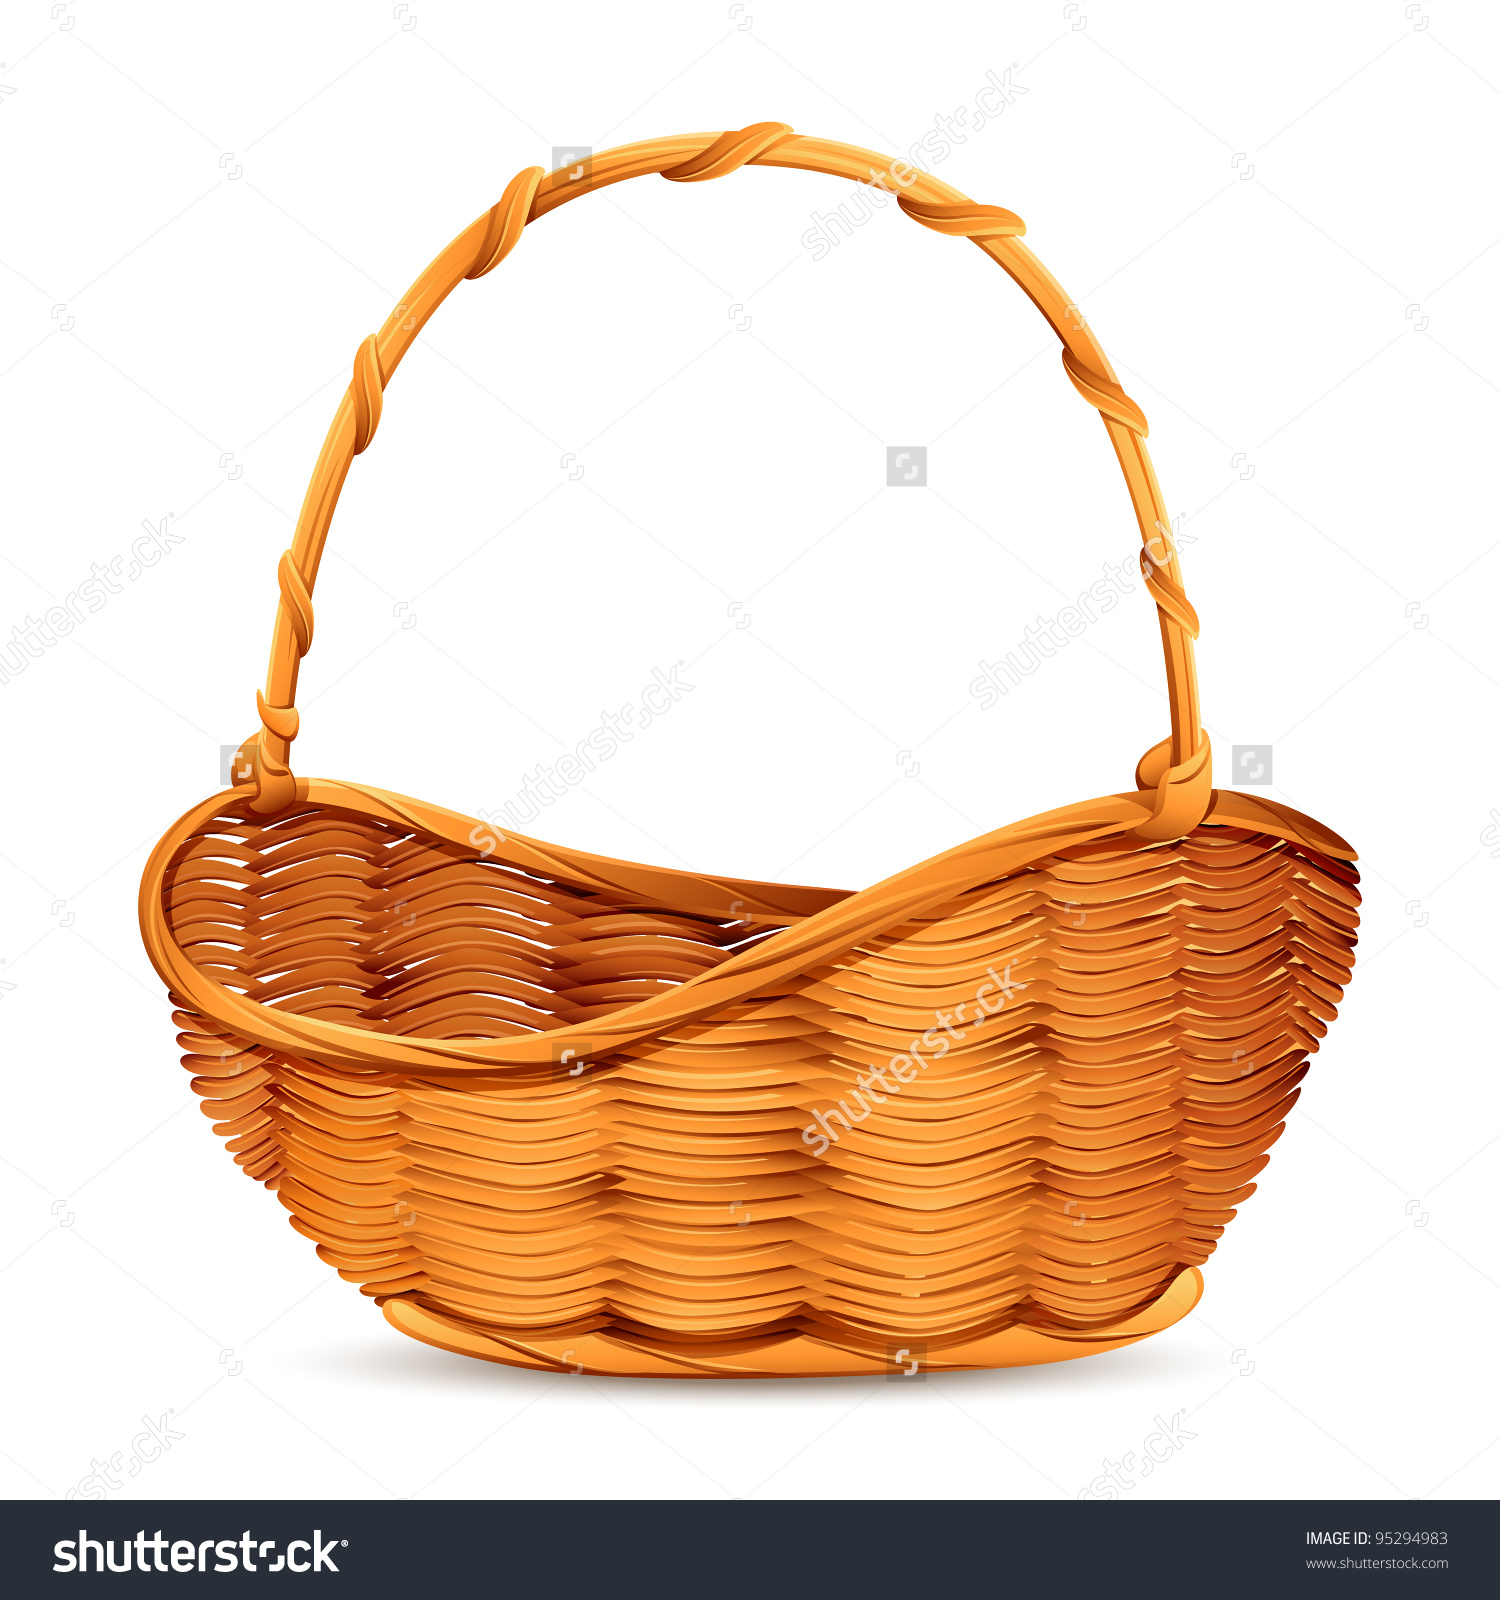 Basket straw basket